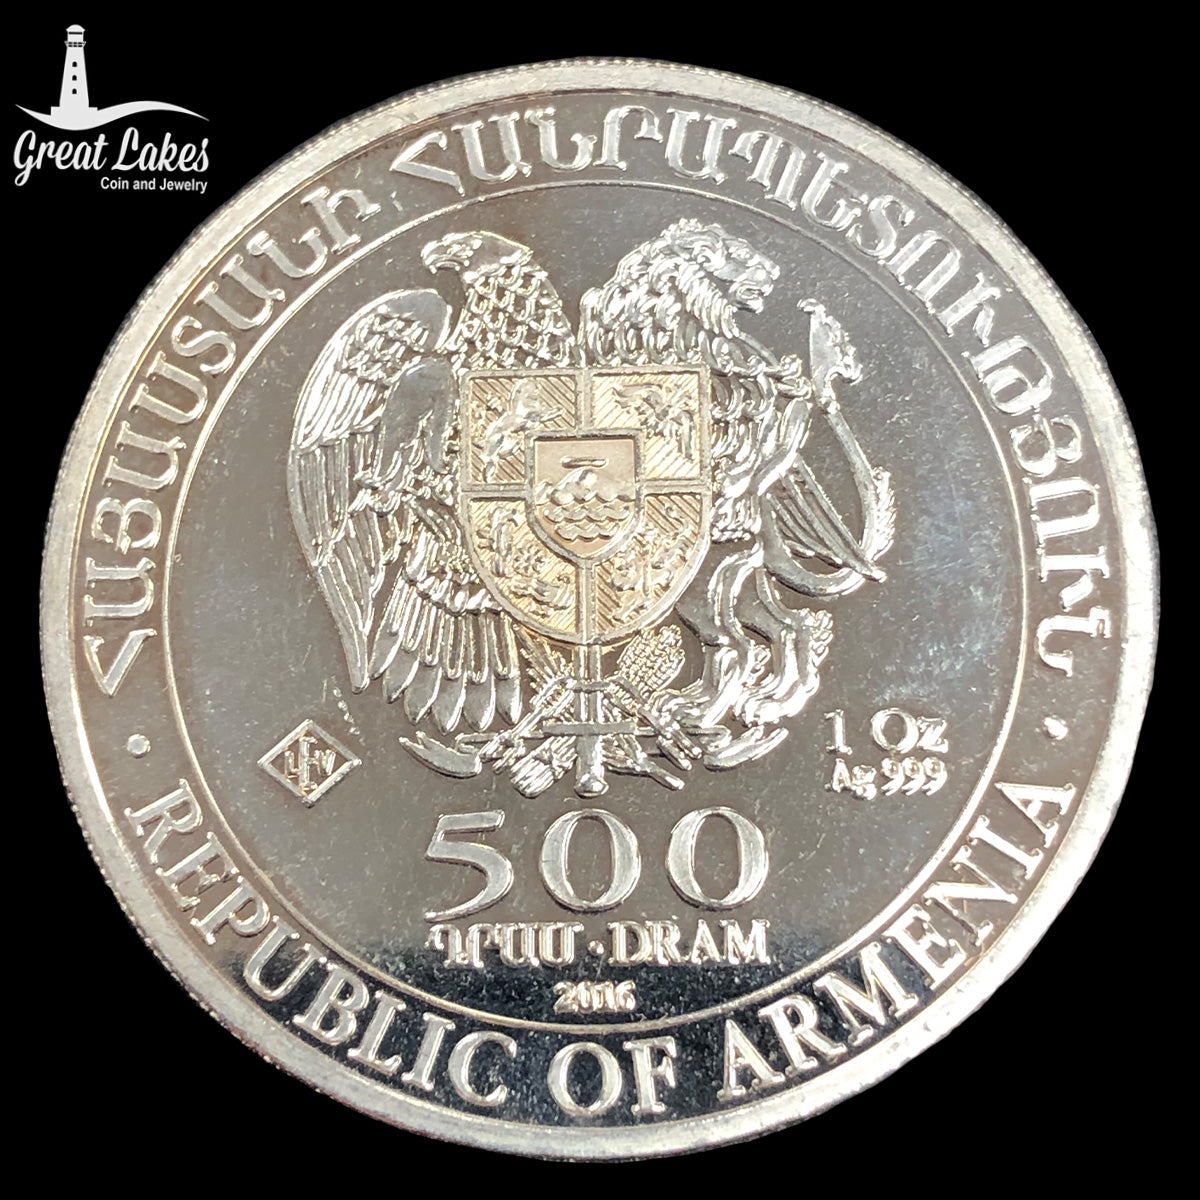 Armenian 1 oz Silver Noahs Ark